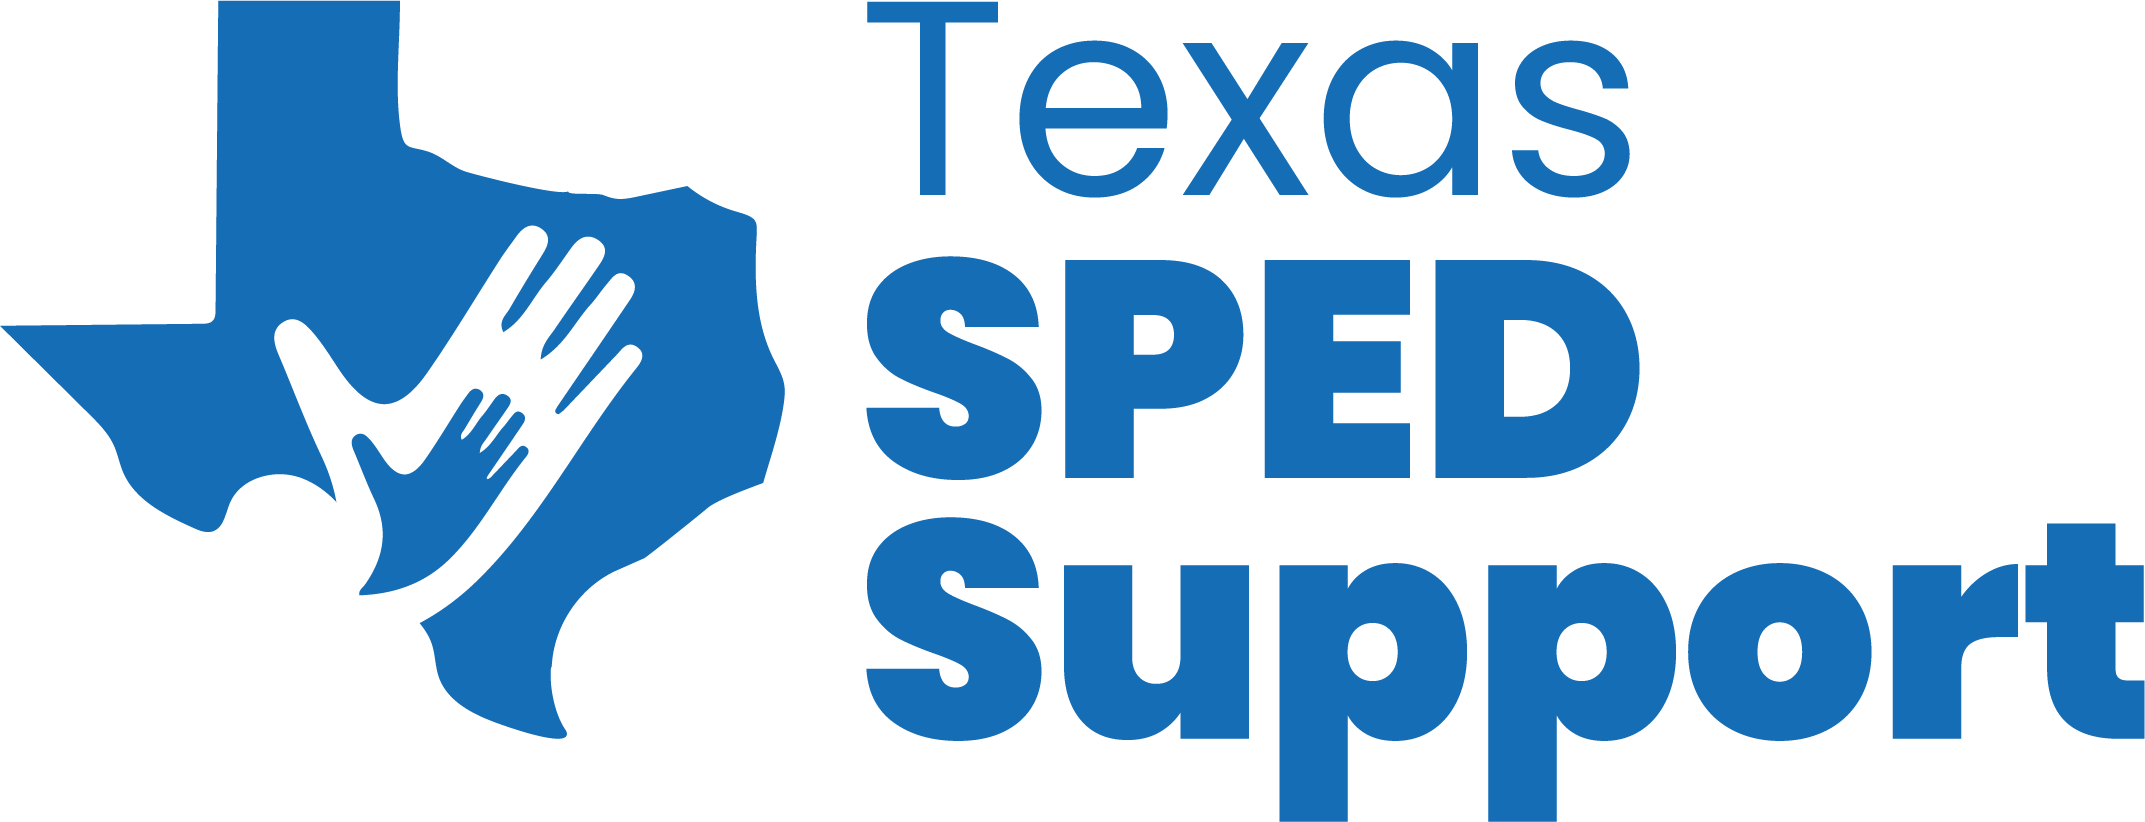 Special Education | Texas Education Agency